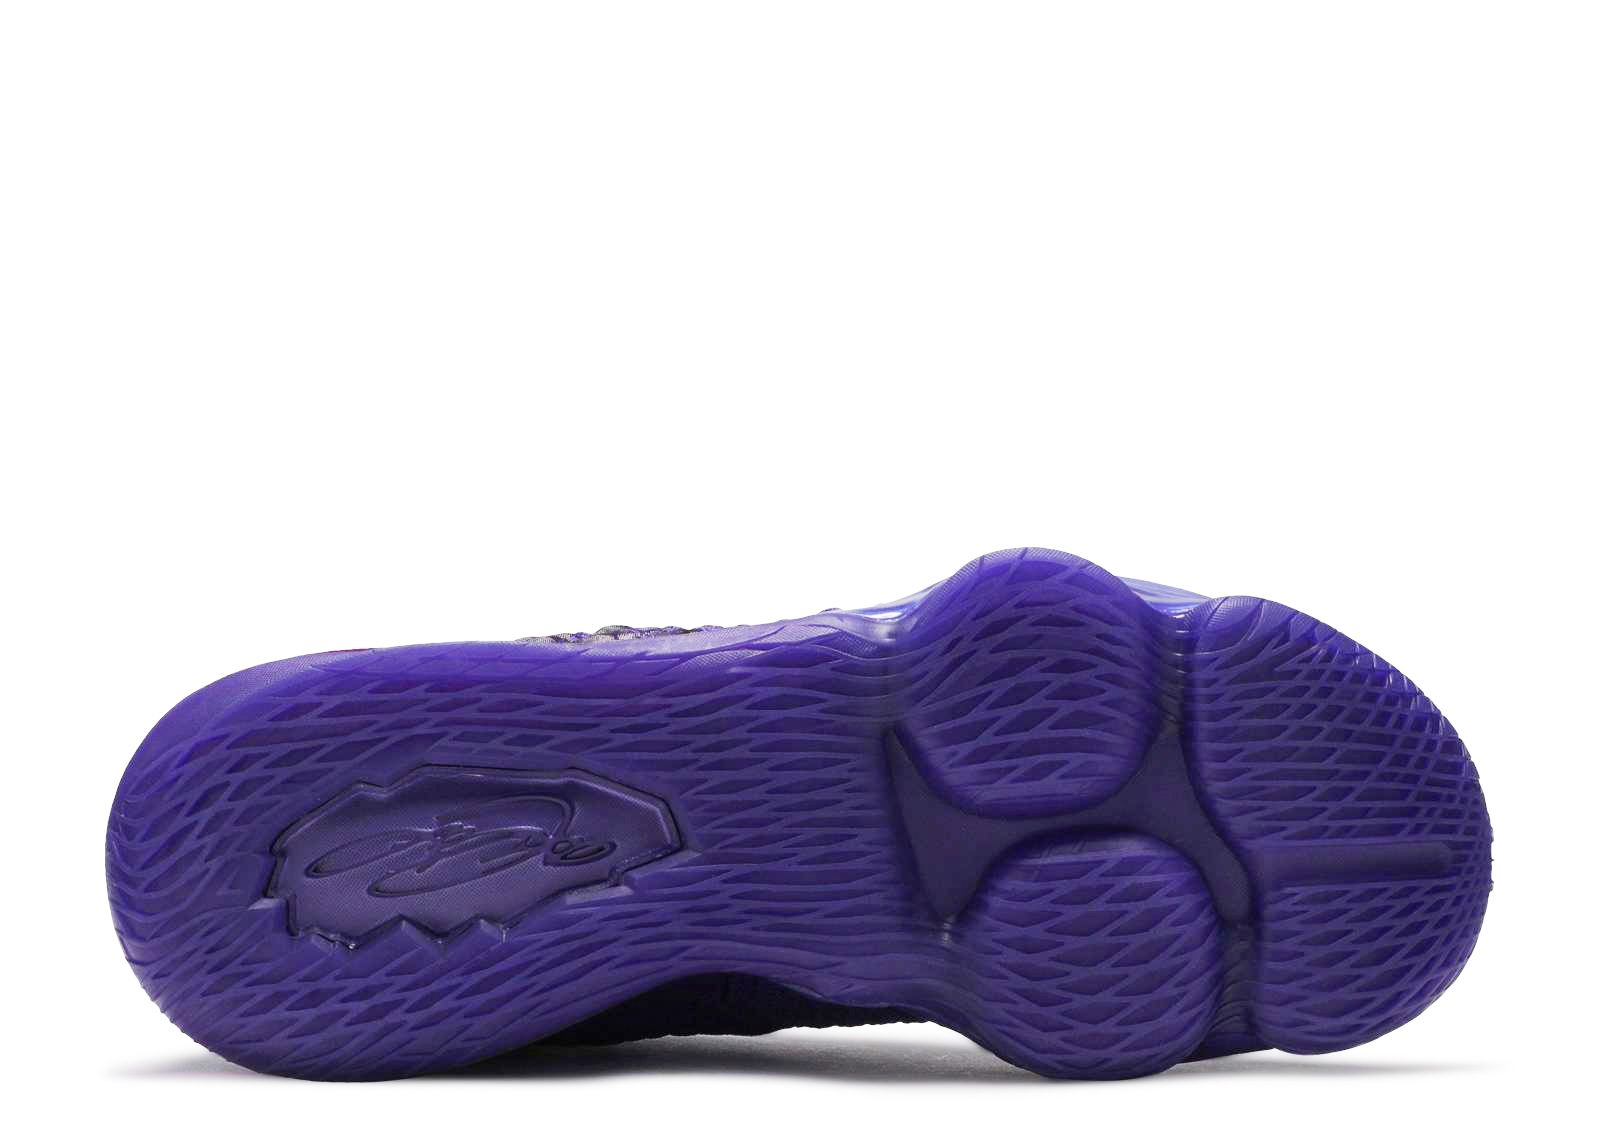 Nike LeBron 17 “Bron 2K” Purple For Sale – Sneaker Hello